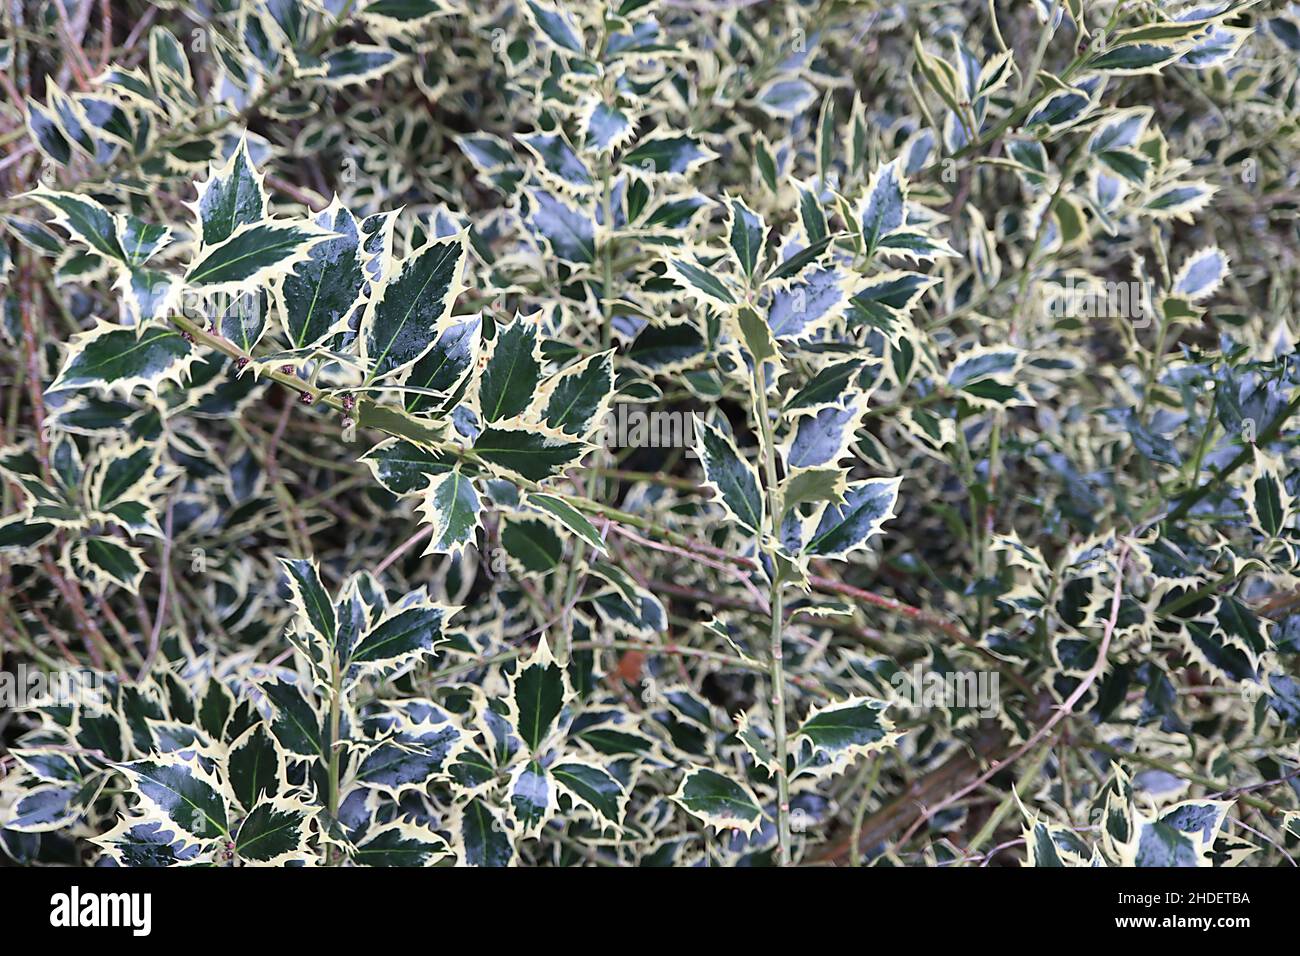 Ilex aquifolium Elegantissima Holly Elegantissima – folta vegetazione con foglie verde scuro, costola verde pallido e margini di crema spky, gennaio, Inghilterra Foto Stock